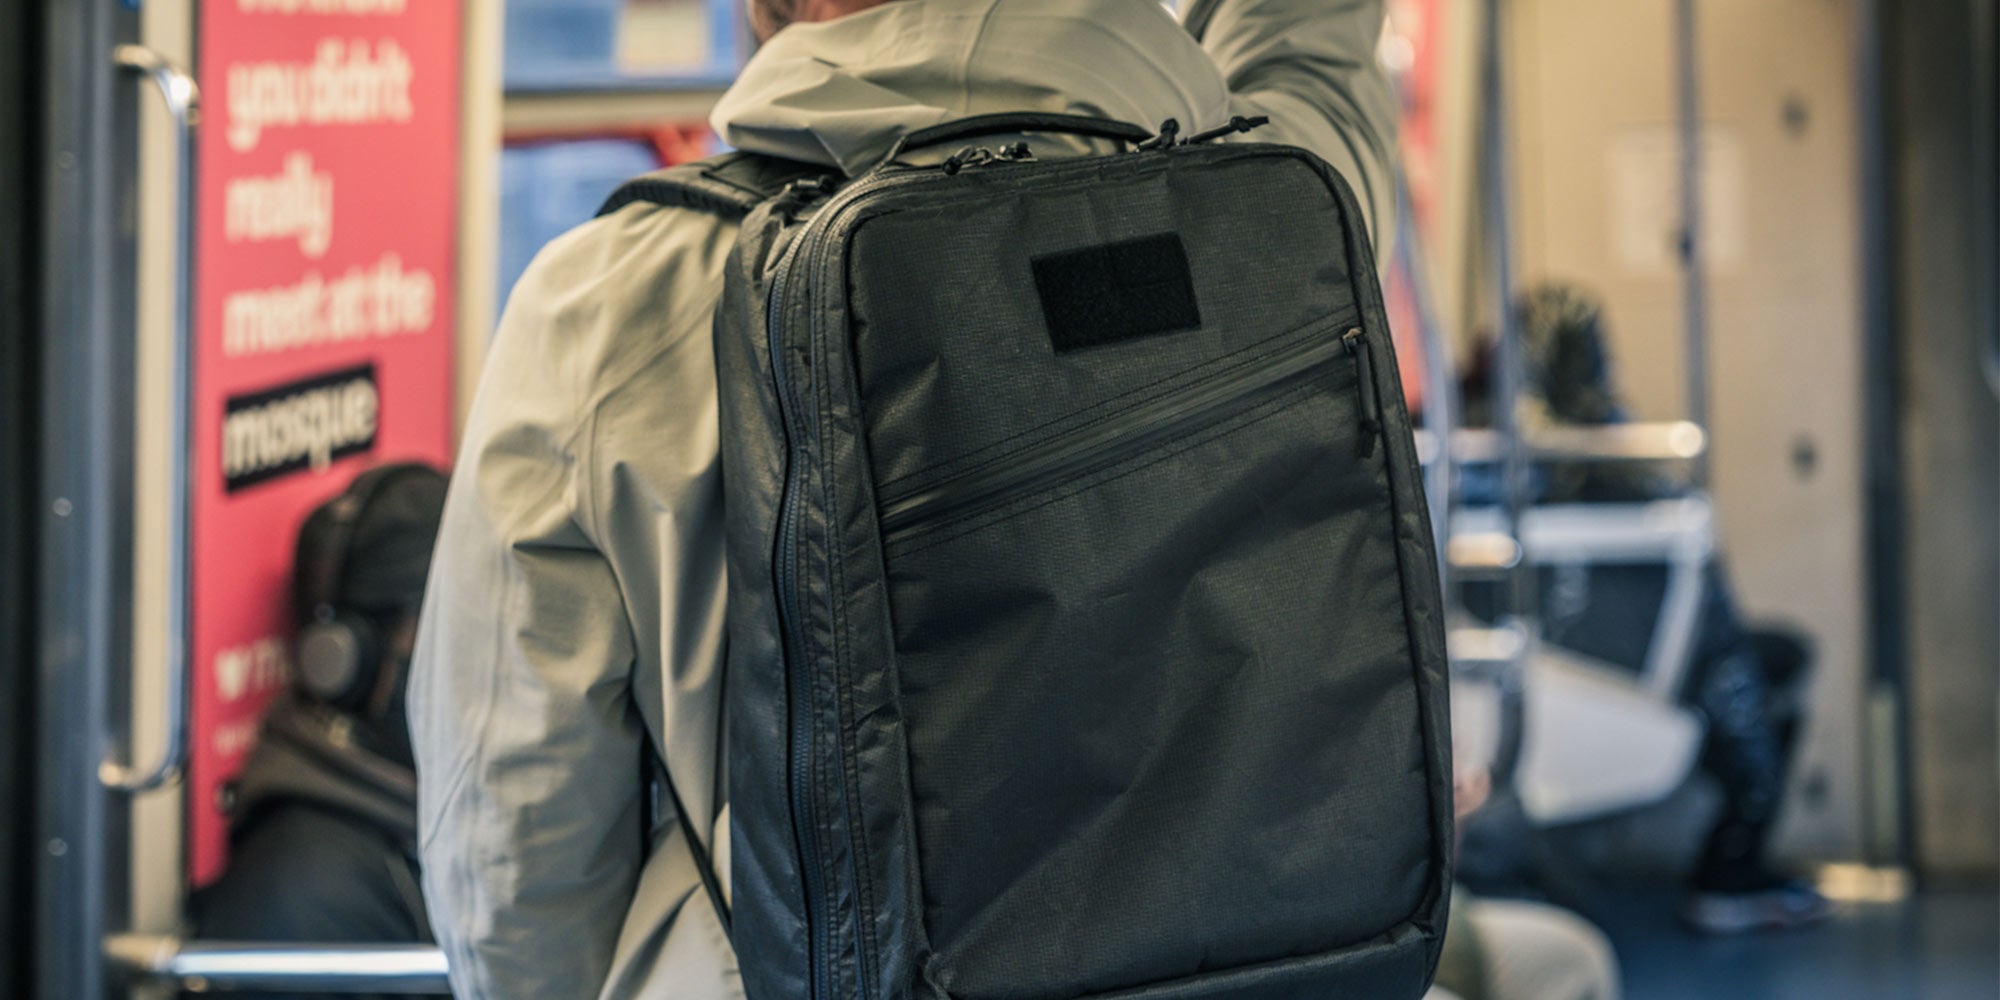 Carryology & GORUCK Bring Back the GRXC2 Samurai GR1 Backpack